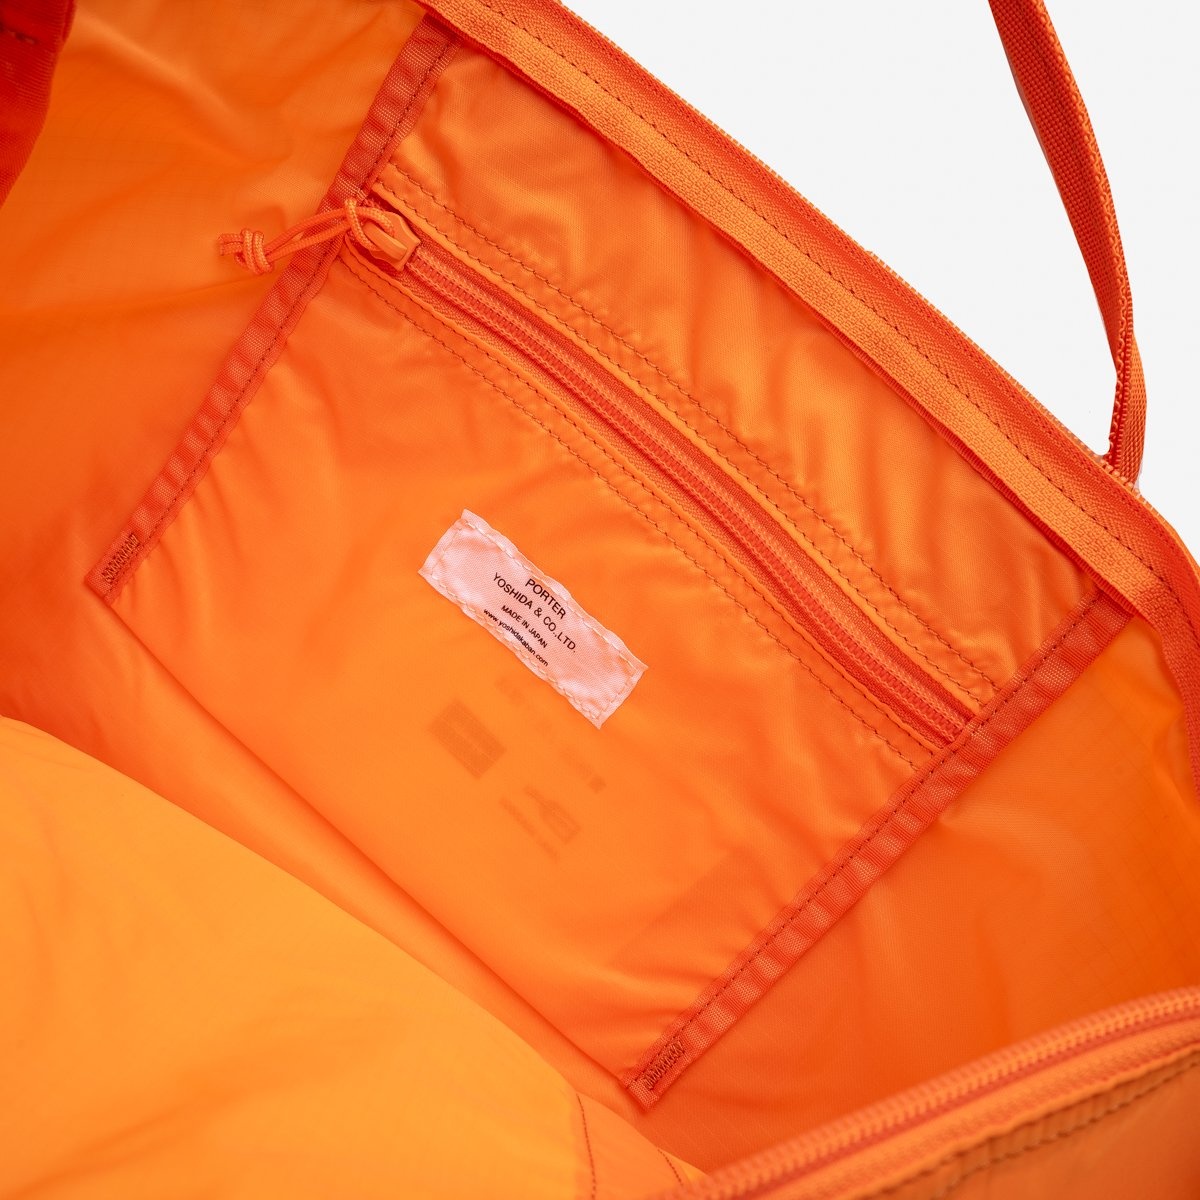 POR-FLEX-TOTE-ORA Porter - Yoshida & Co. - Flex 2Way Tote Bag - Orange - 8